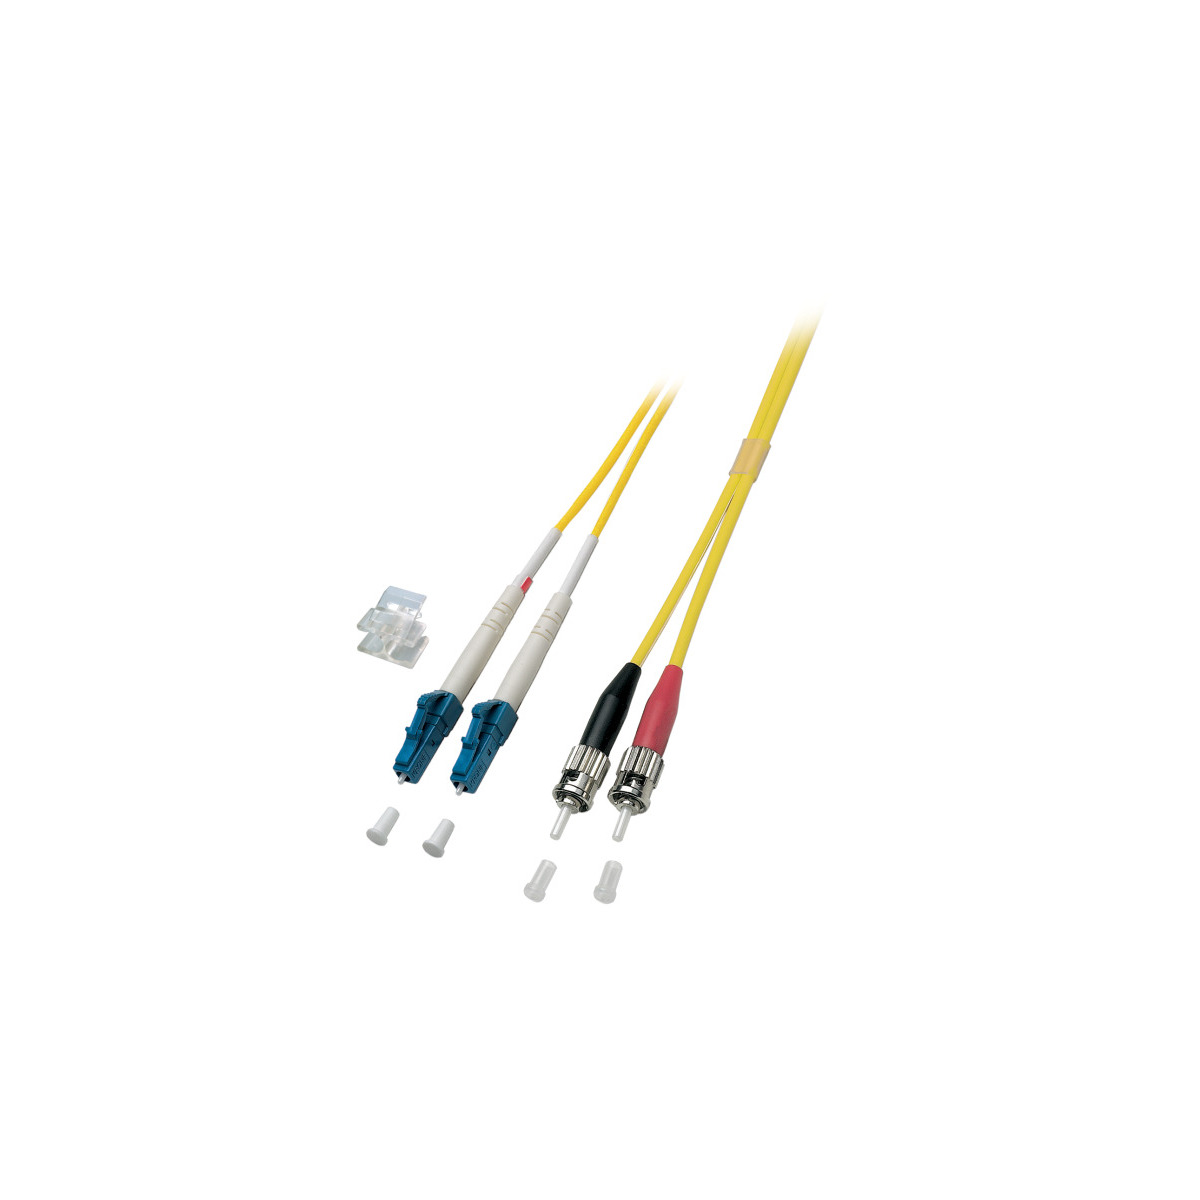 COMMUNIK Kabel m - 2 ST, Jumper Glasfaserkabel, LC / Duplex